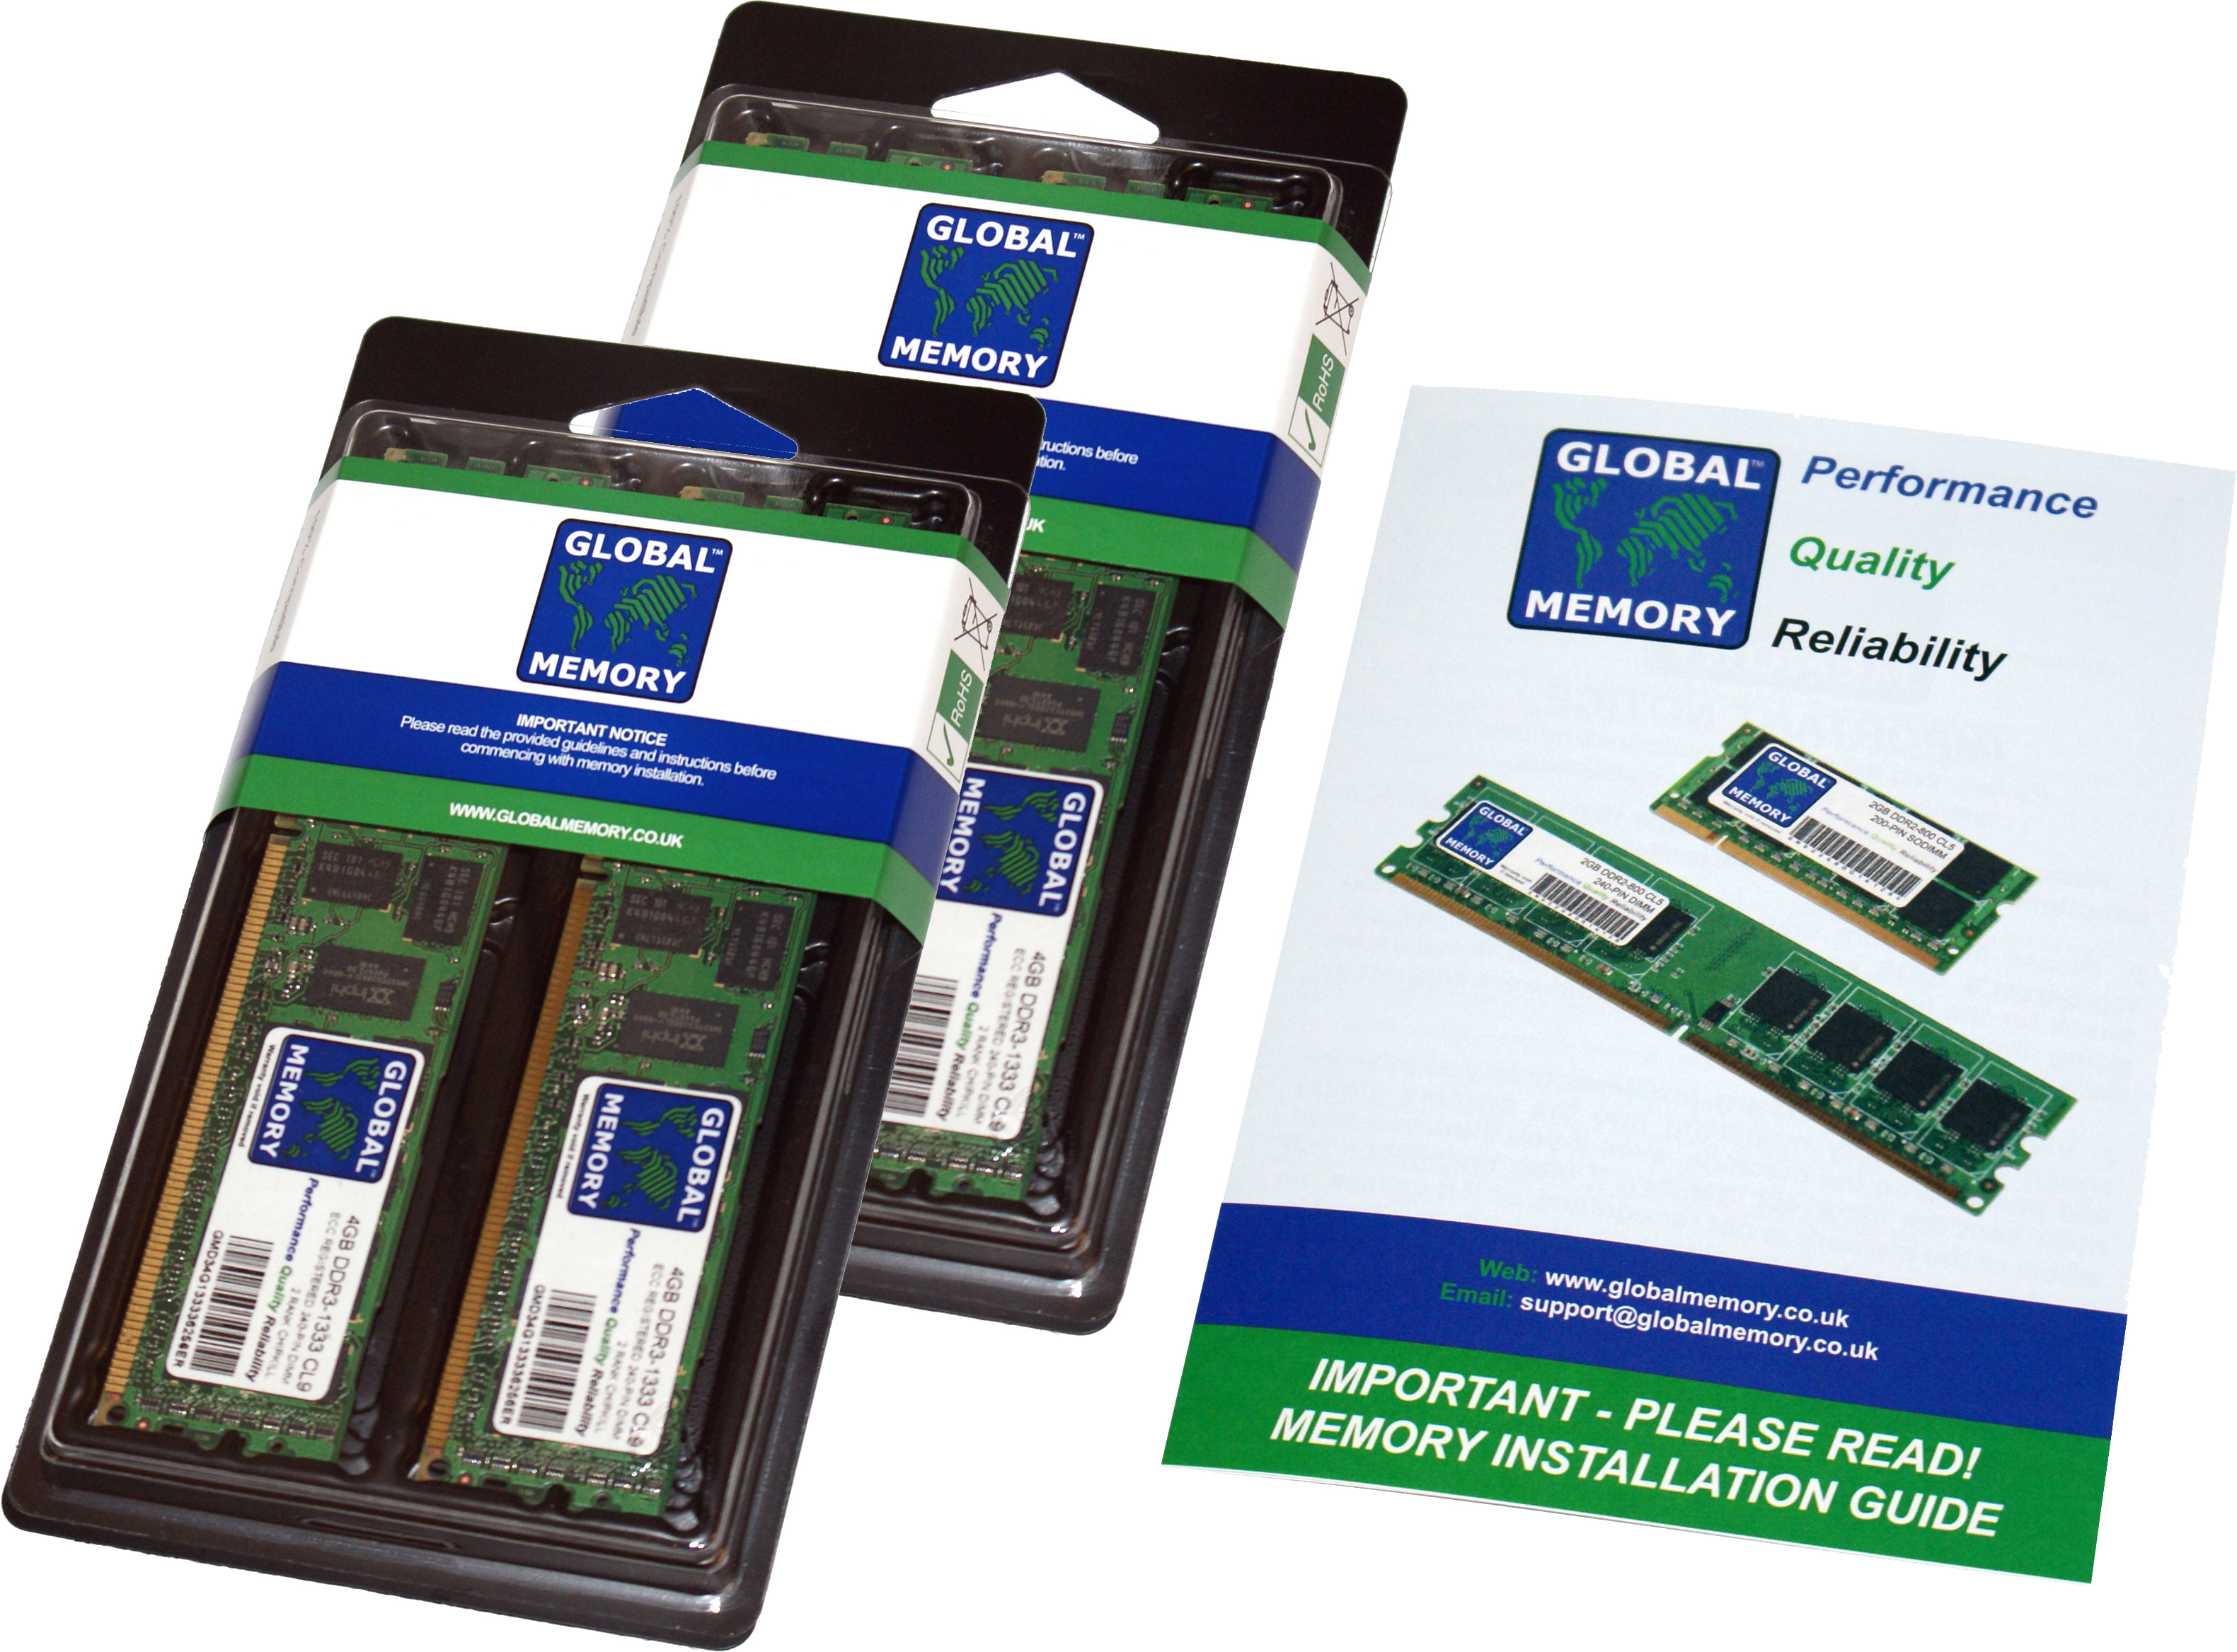 128GB (4 x 32GB) DDR4 2400MHz PC4-19200 288-PIN ECC REGISTERED DIMM (RDIMM) MEMORY RAM KIT FOR ACER SERVERS/WORKSTATIONS (16 RANK KIT CHIPKILL)